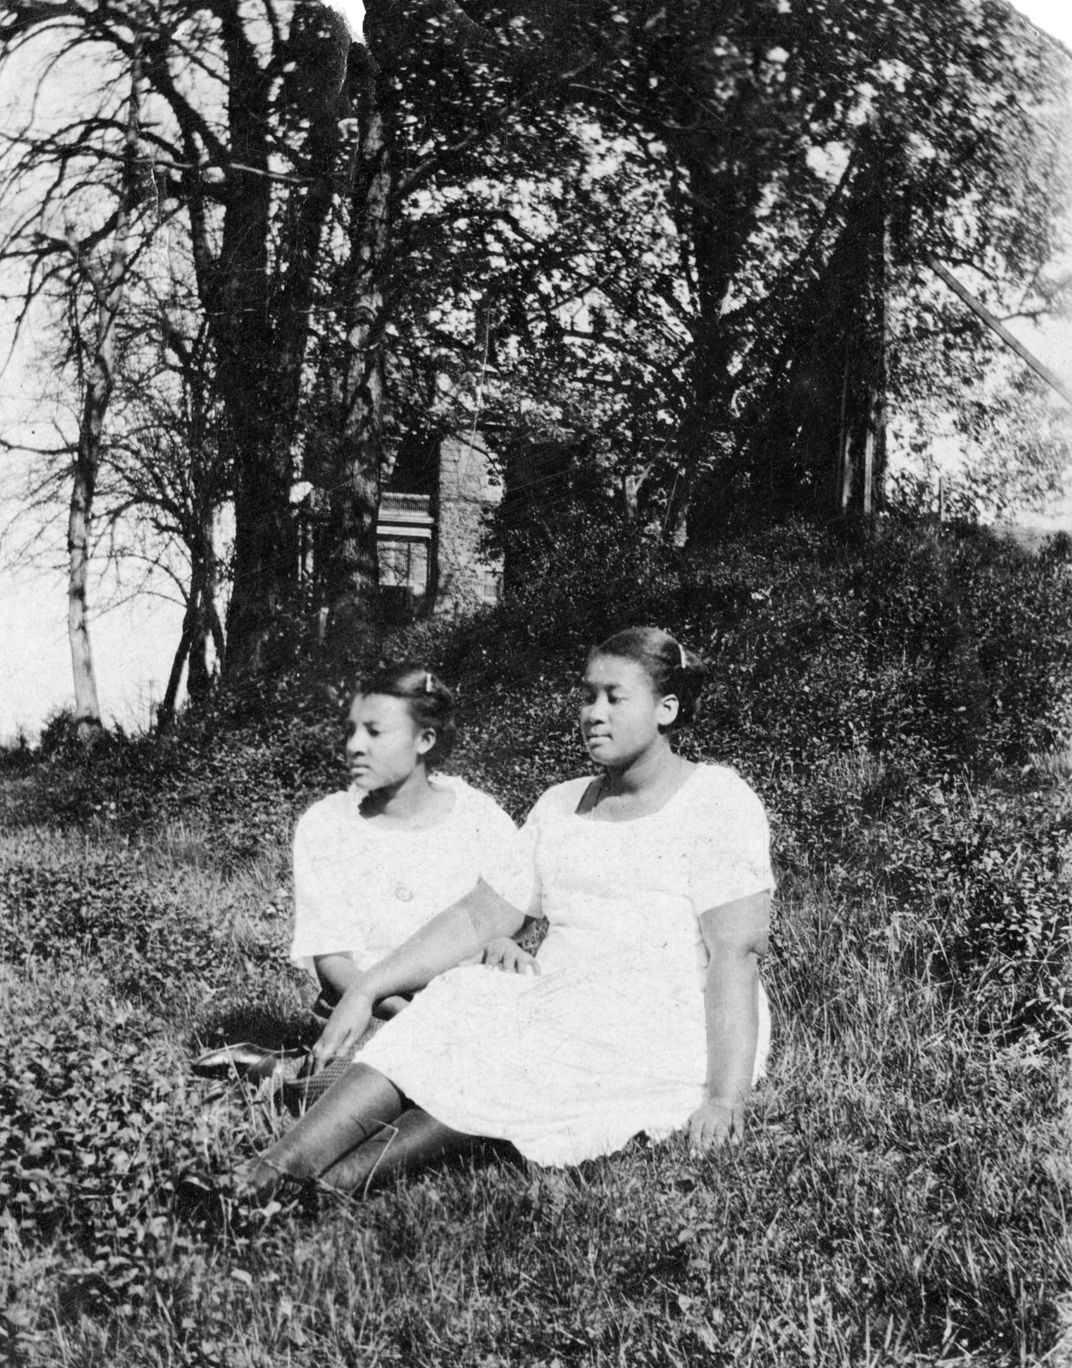 Roberta G. Thomas and Flaurience Sengstacke as young girls